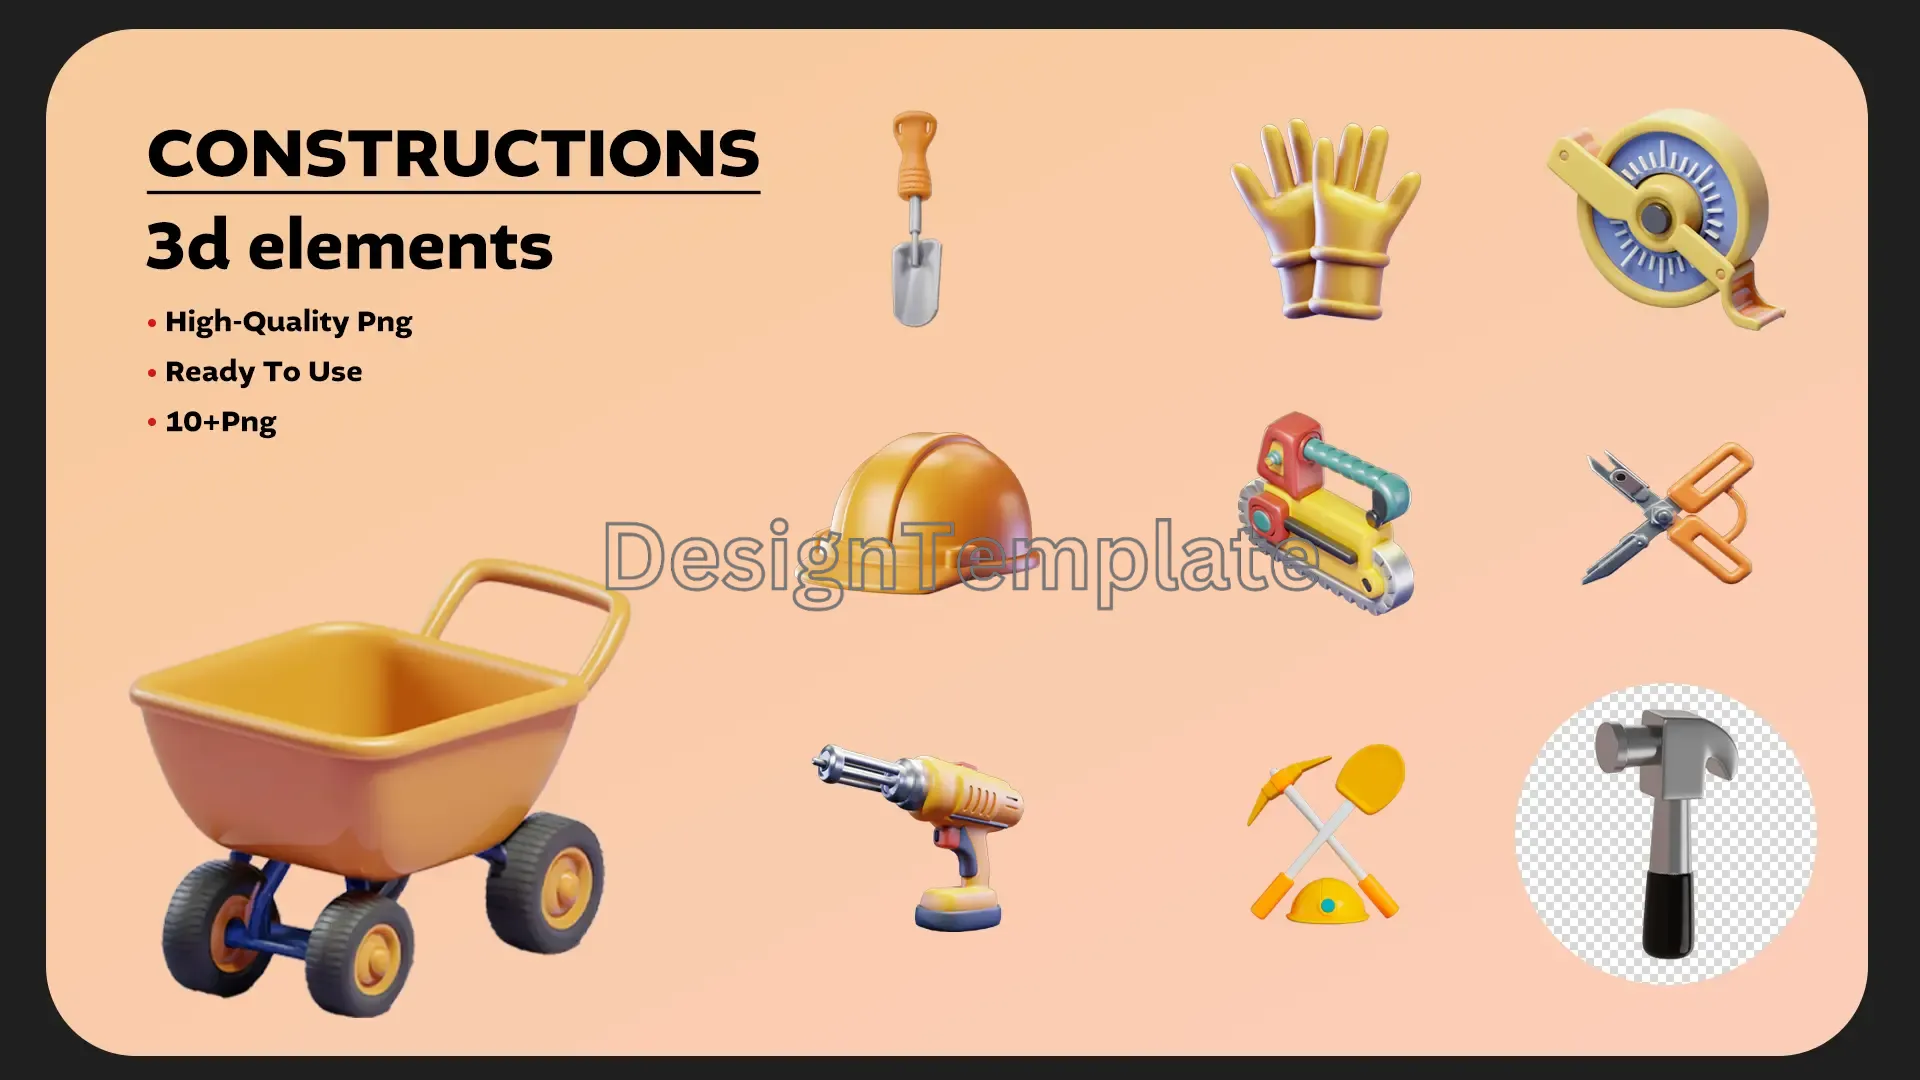 Heavy Duty Exquisite 3D Construction Elements Collection